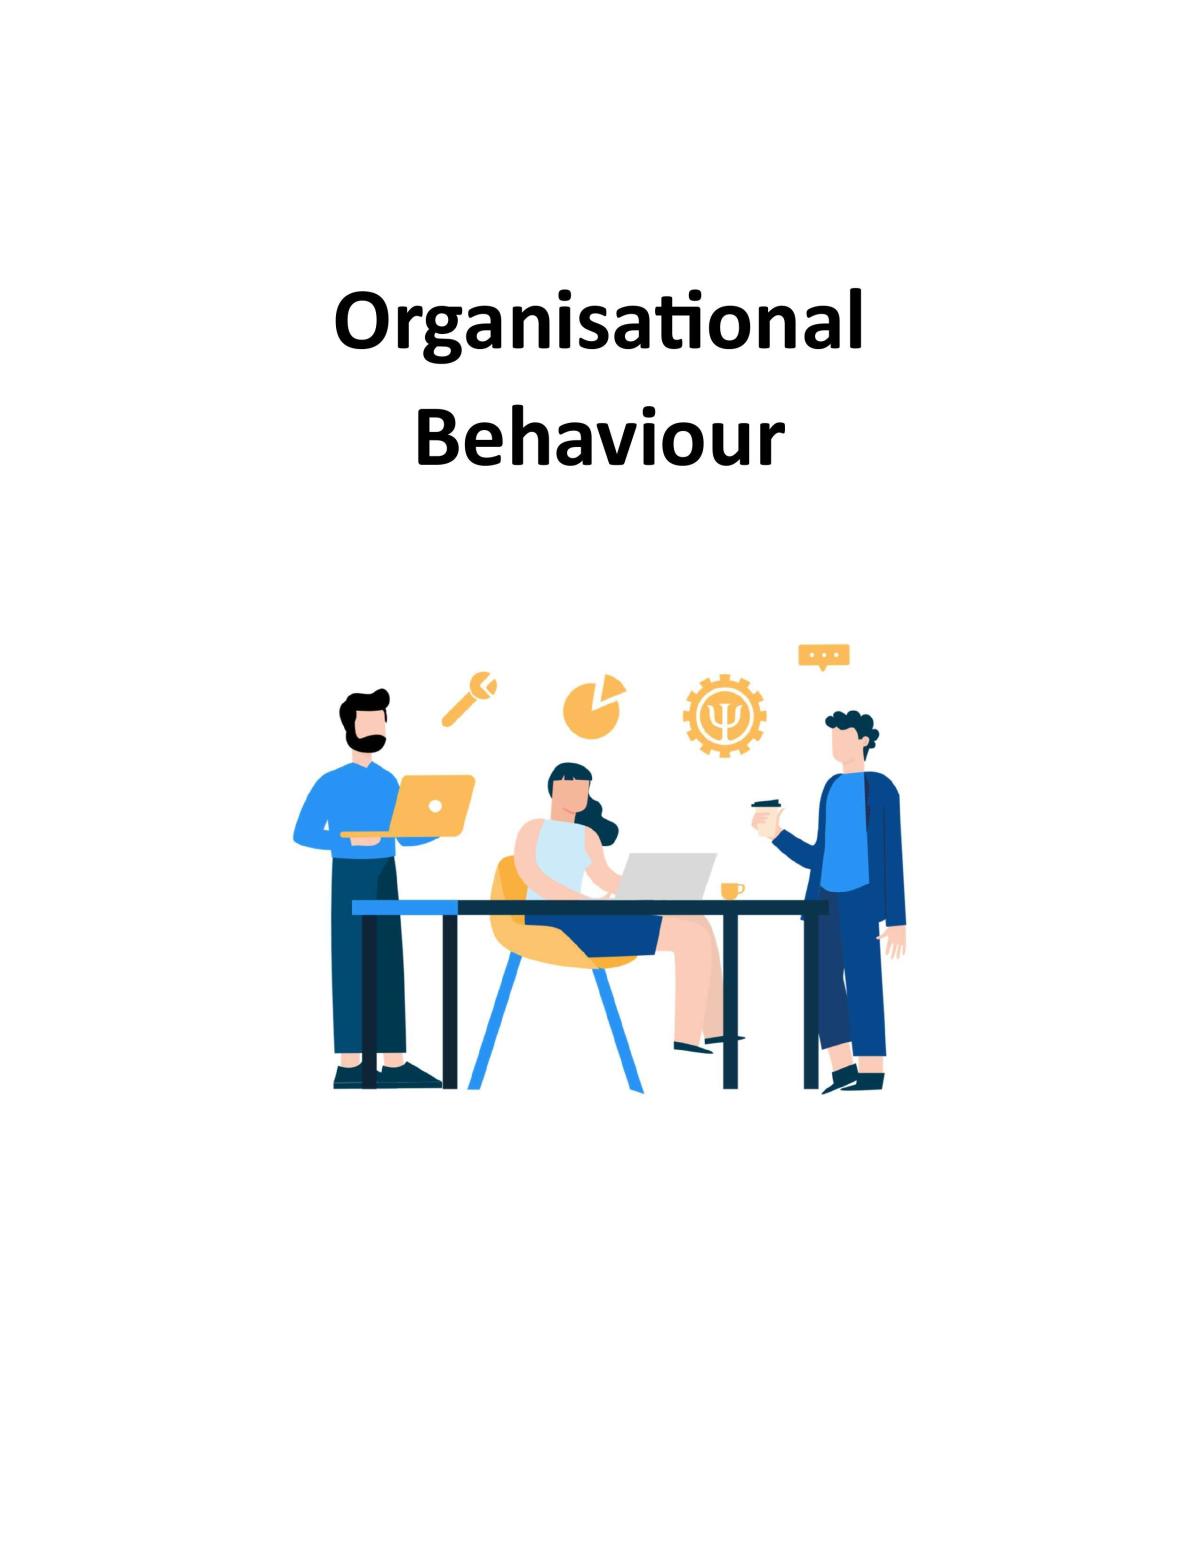 Organisational Behaviour - Page 1